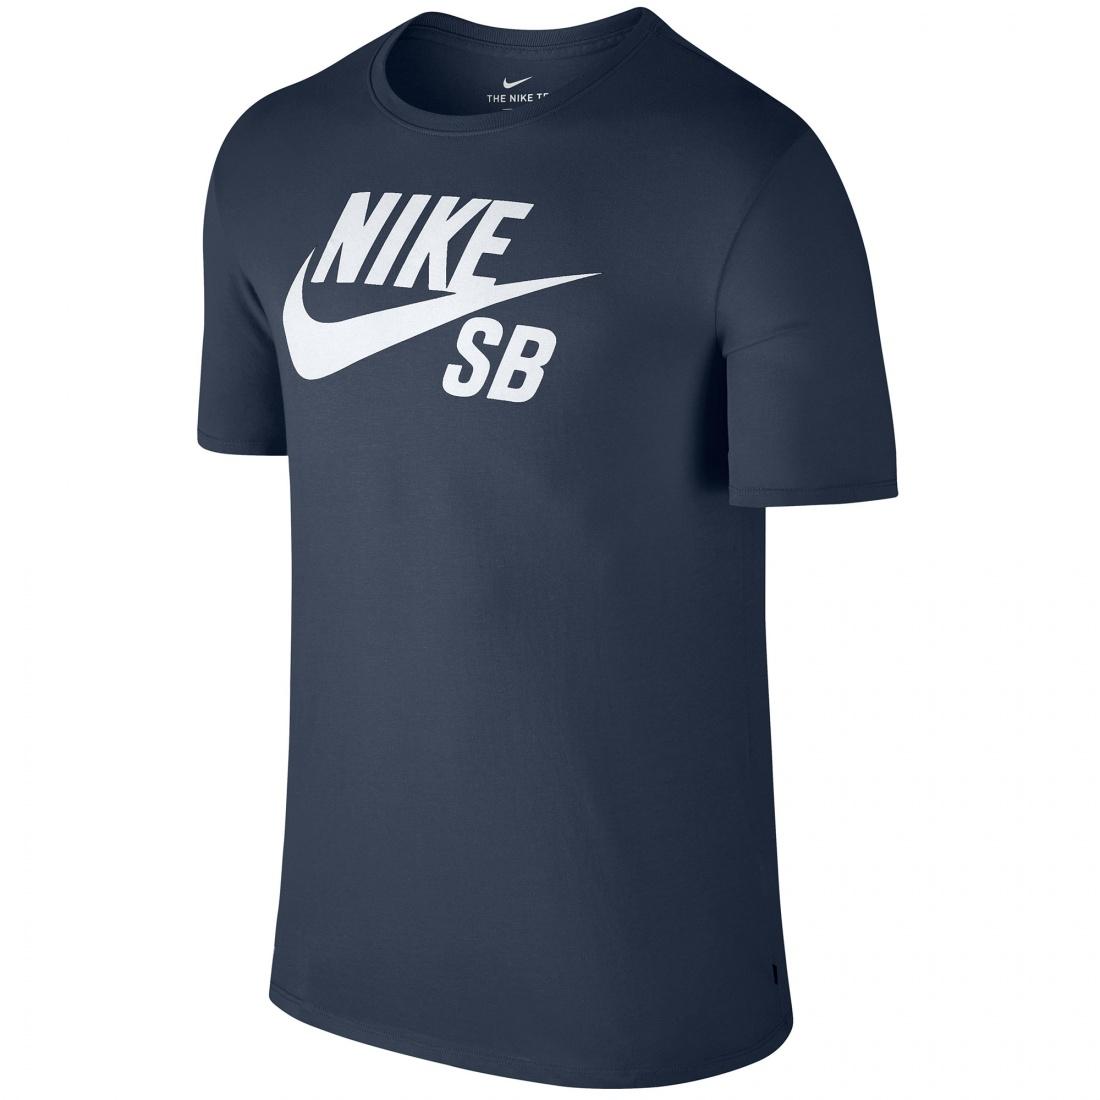 Футболки найк мужские купить. Майки найк SB. Nike SB T Shirt. Nike SB Shirt. Nike SB футболка.